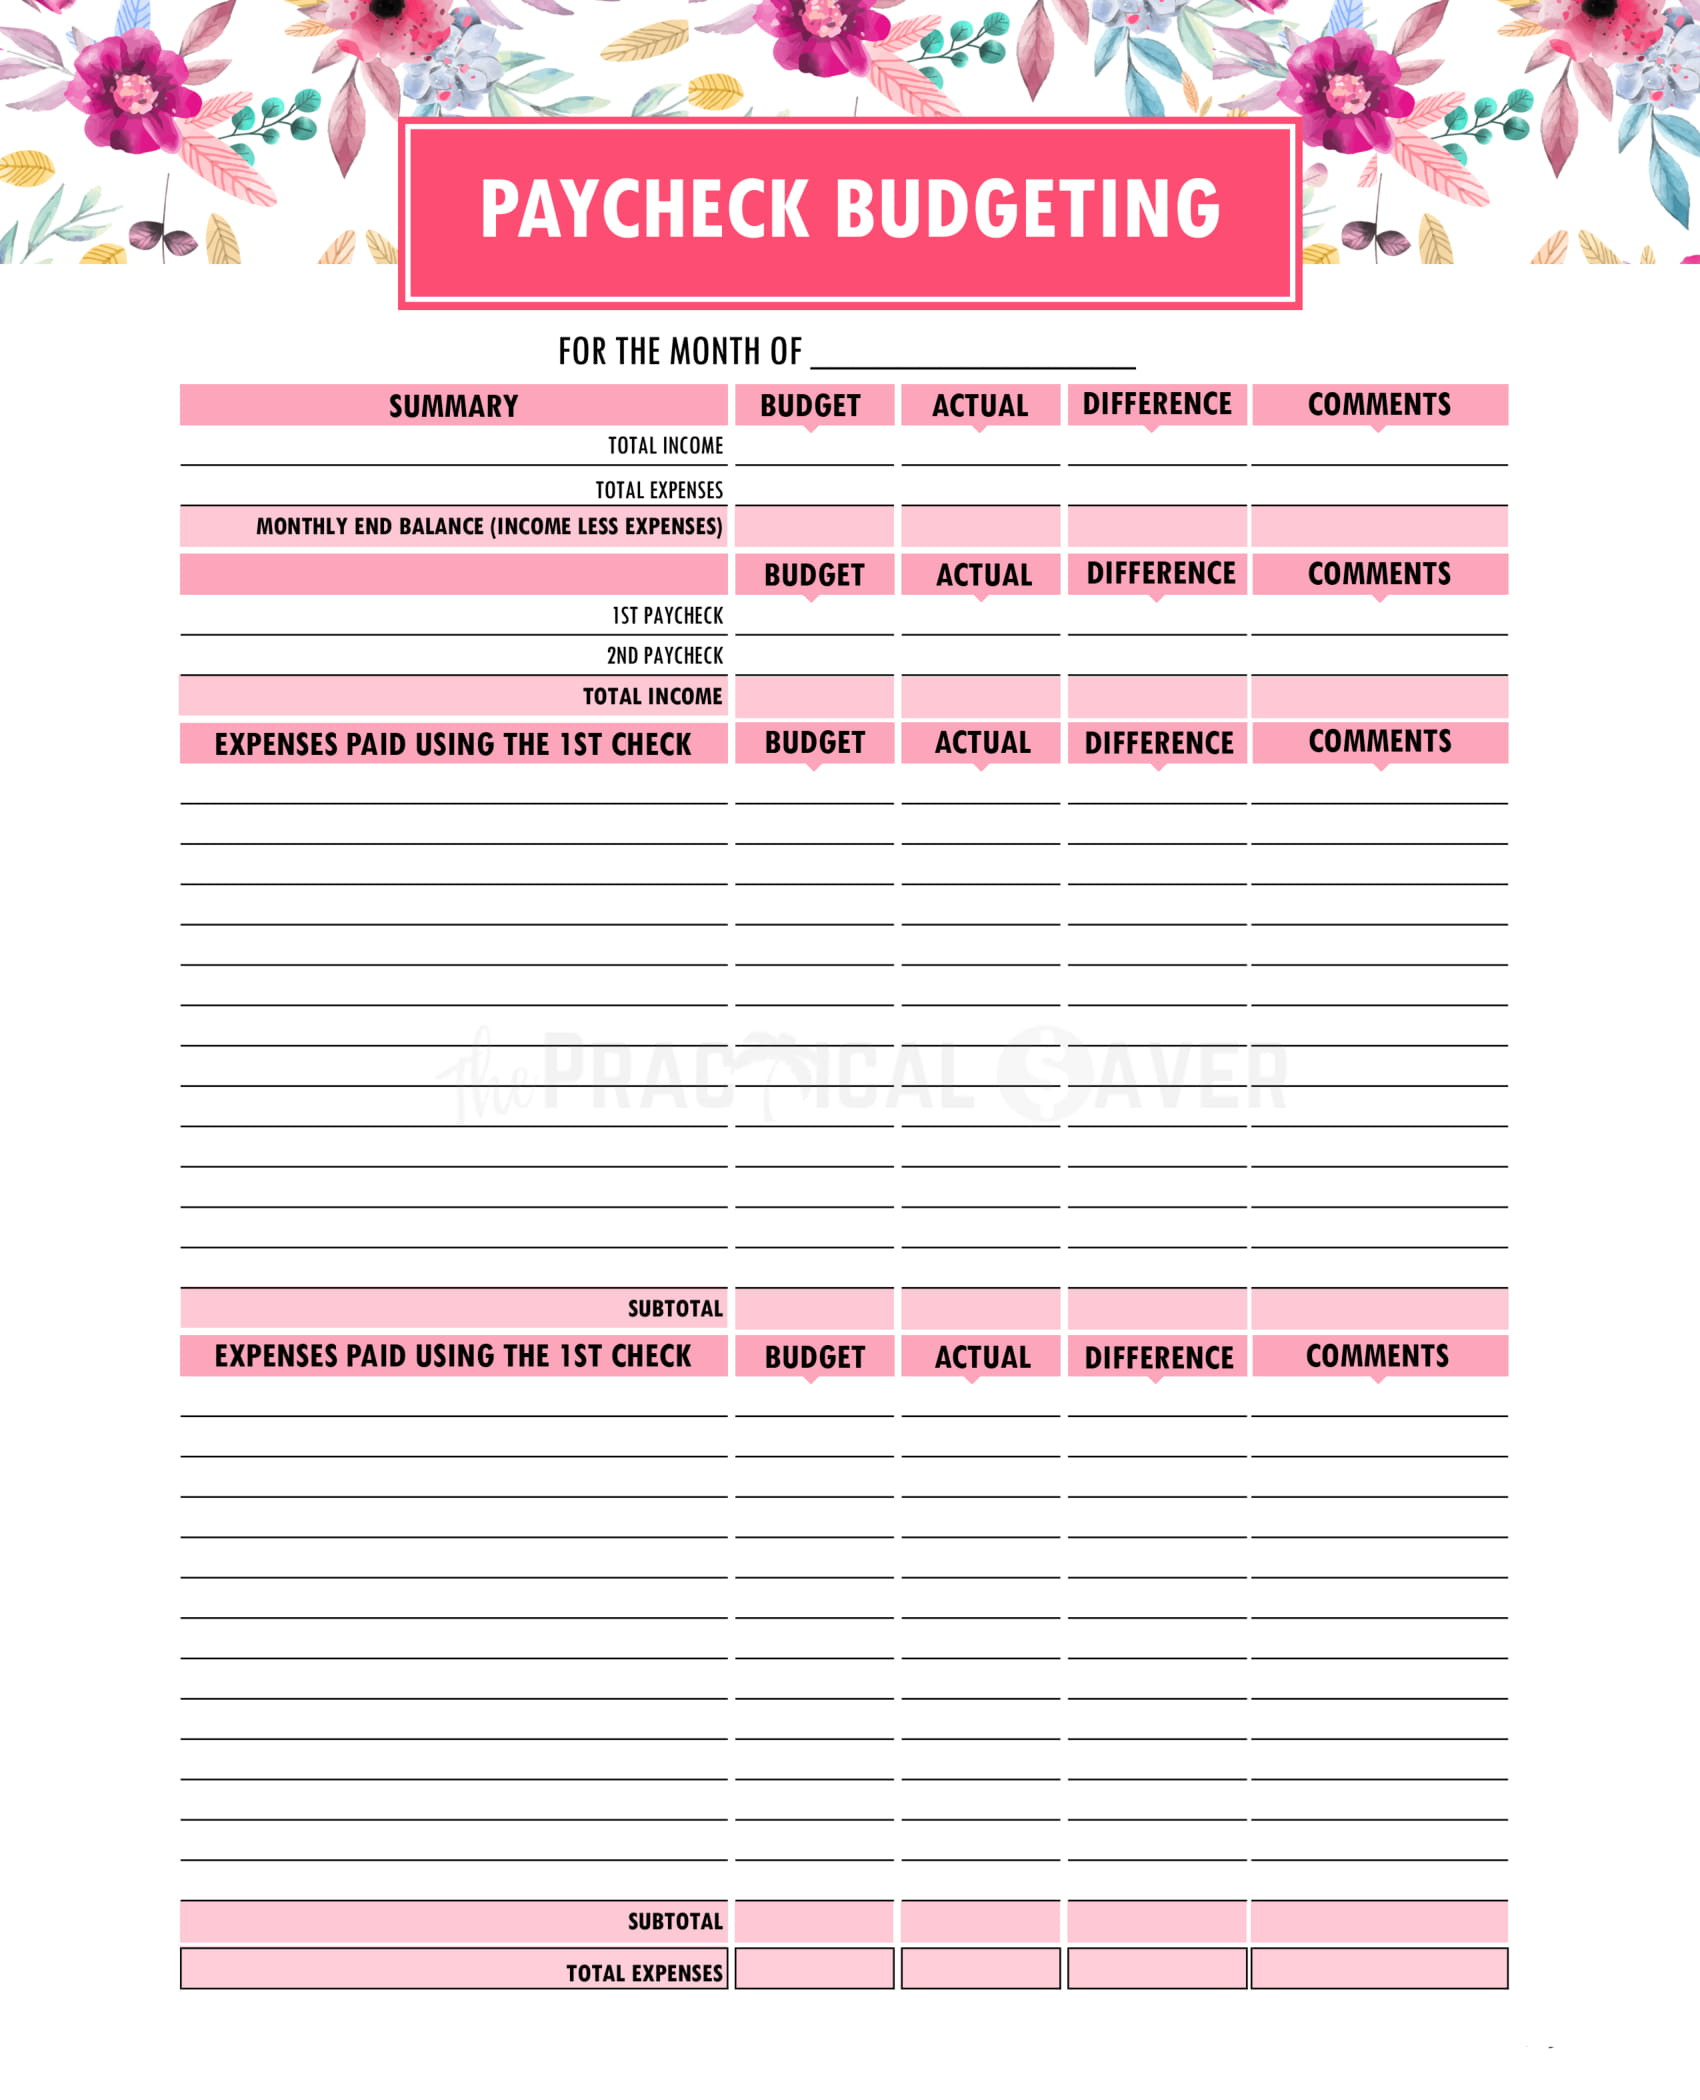 budget planner template printable binder